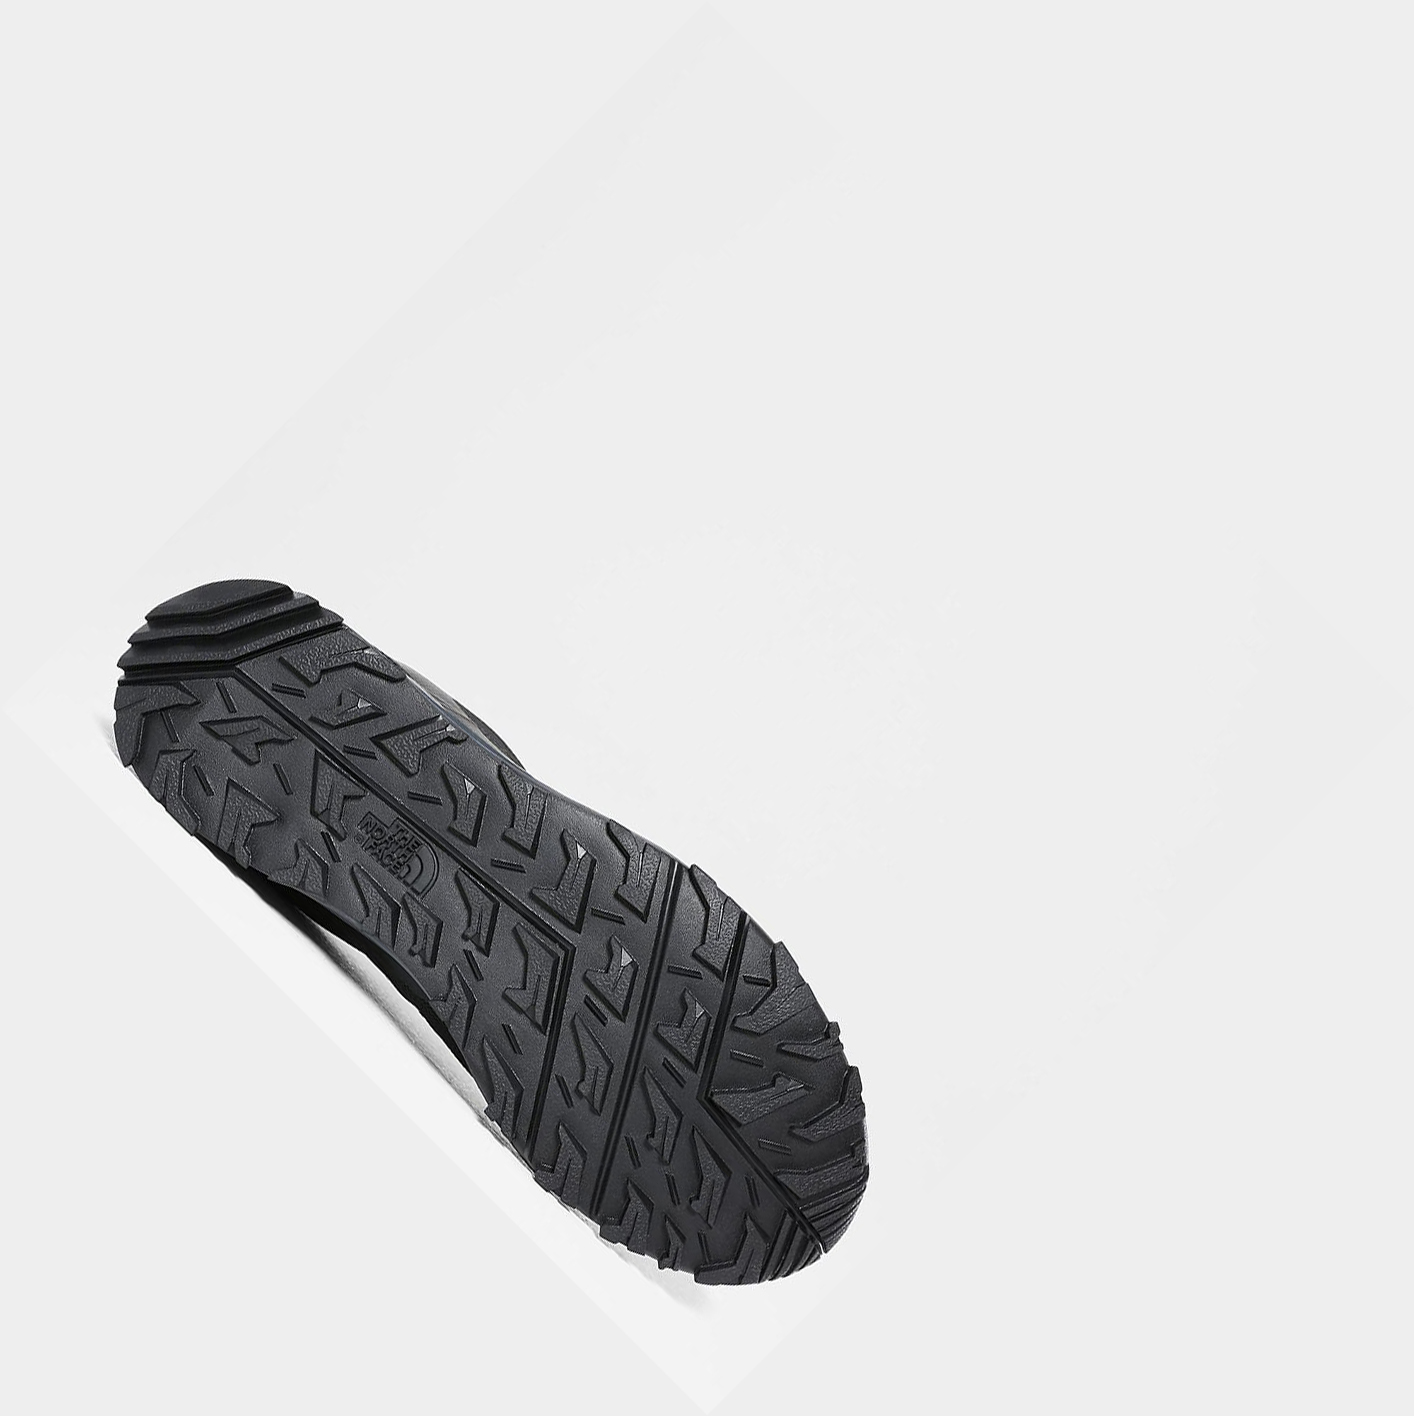 Men's The North Face Litewave Fastpack II Waterproof Hiking Shoes Black Grey | US706XYUA